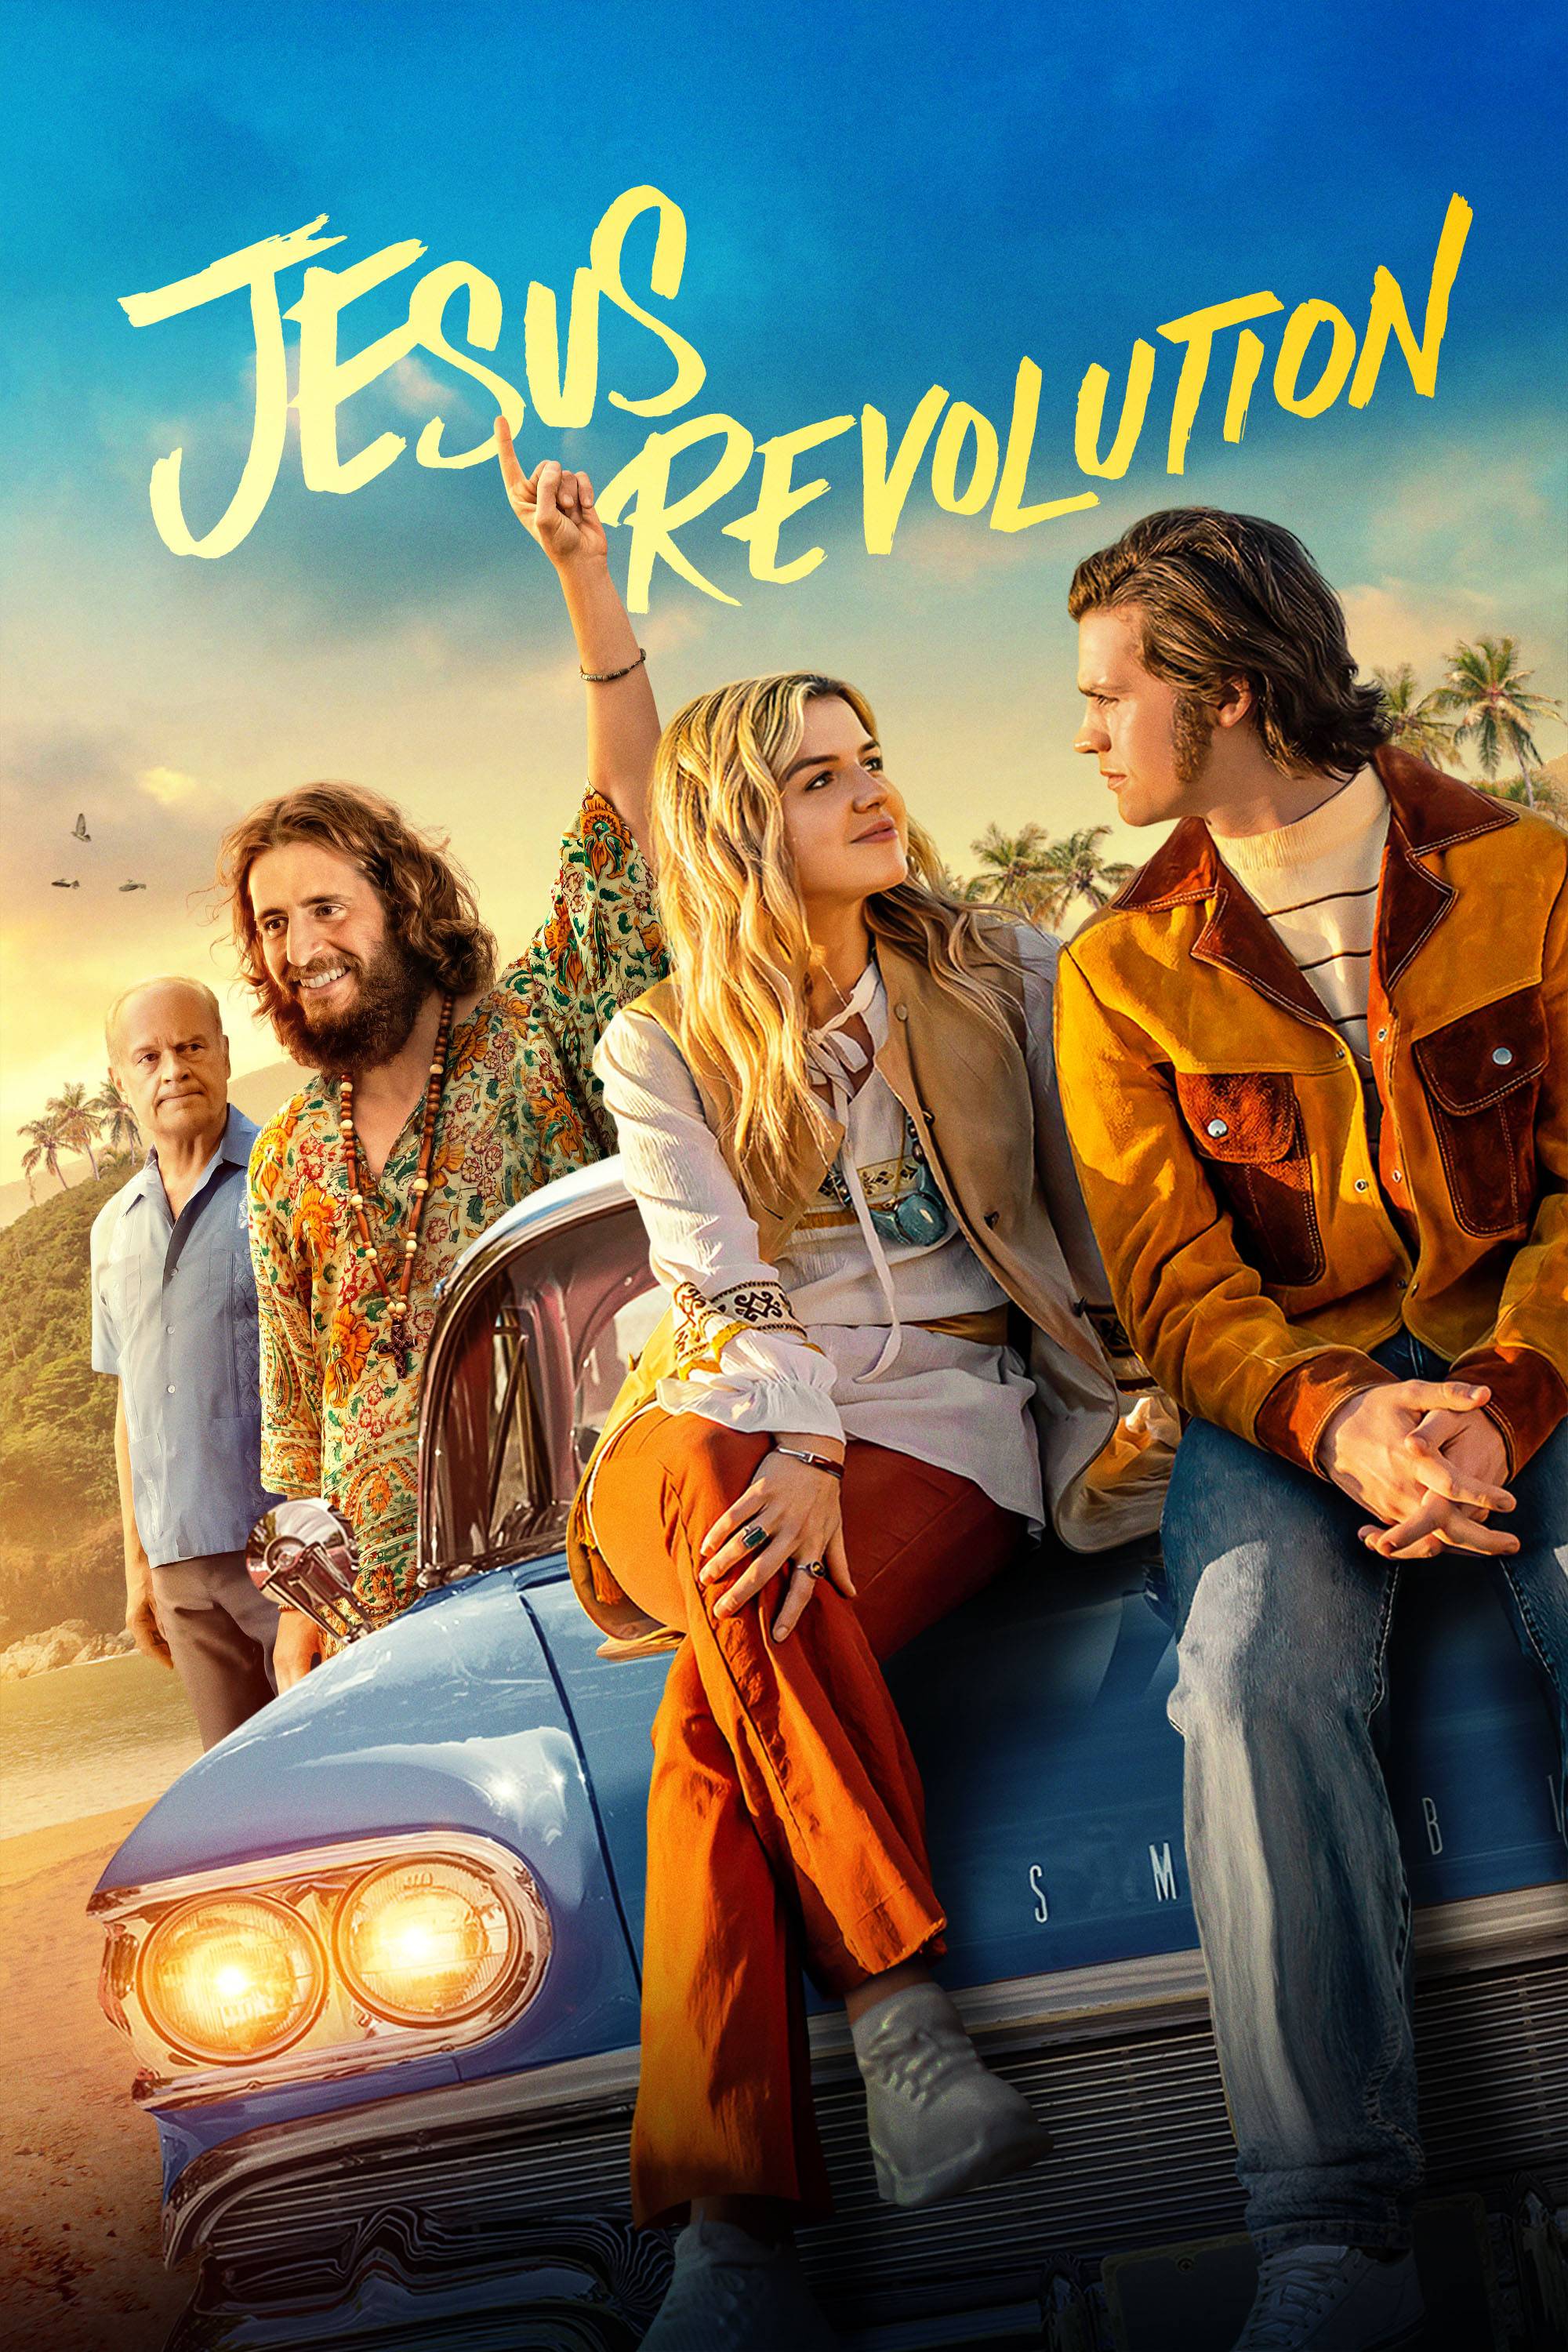 christian movie reviews jesus revolution